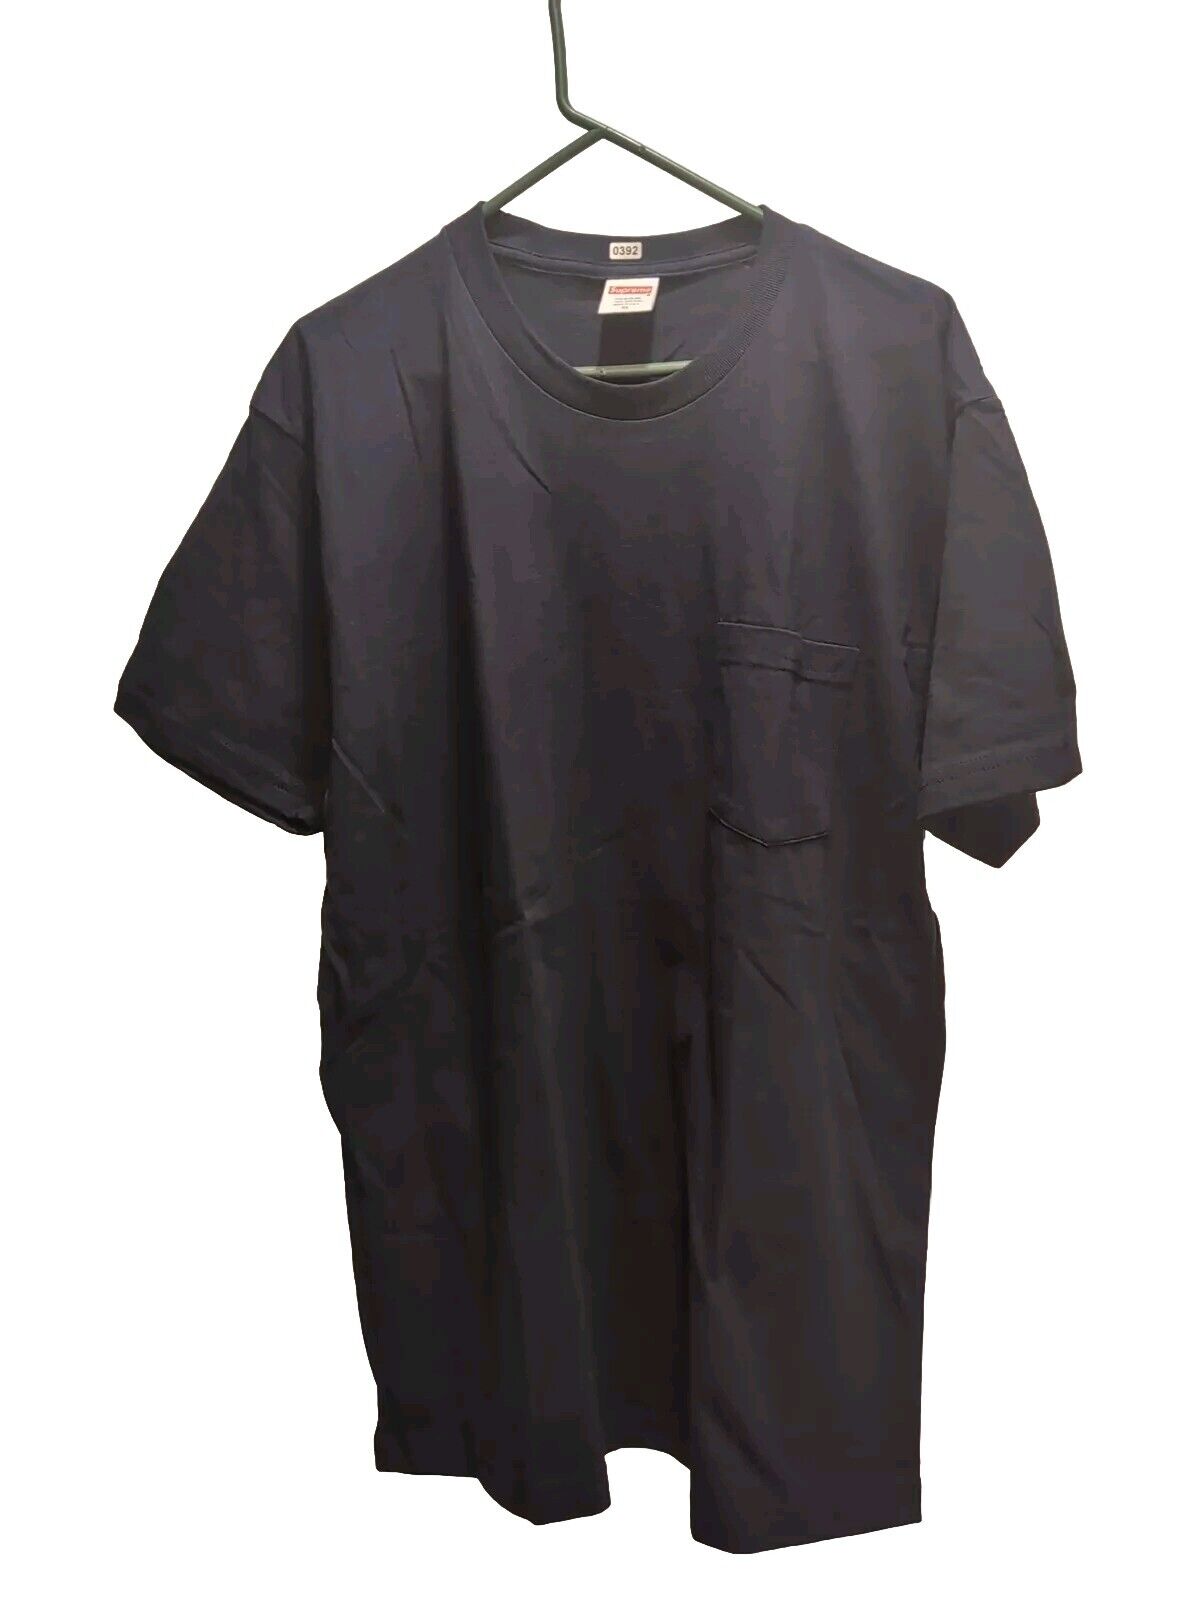 New Supreme XL T-Shirt Plain Dark Blue/Black 100% Cotton Made In U.S.A.